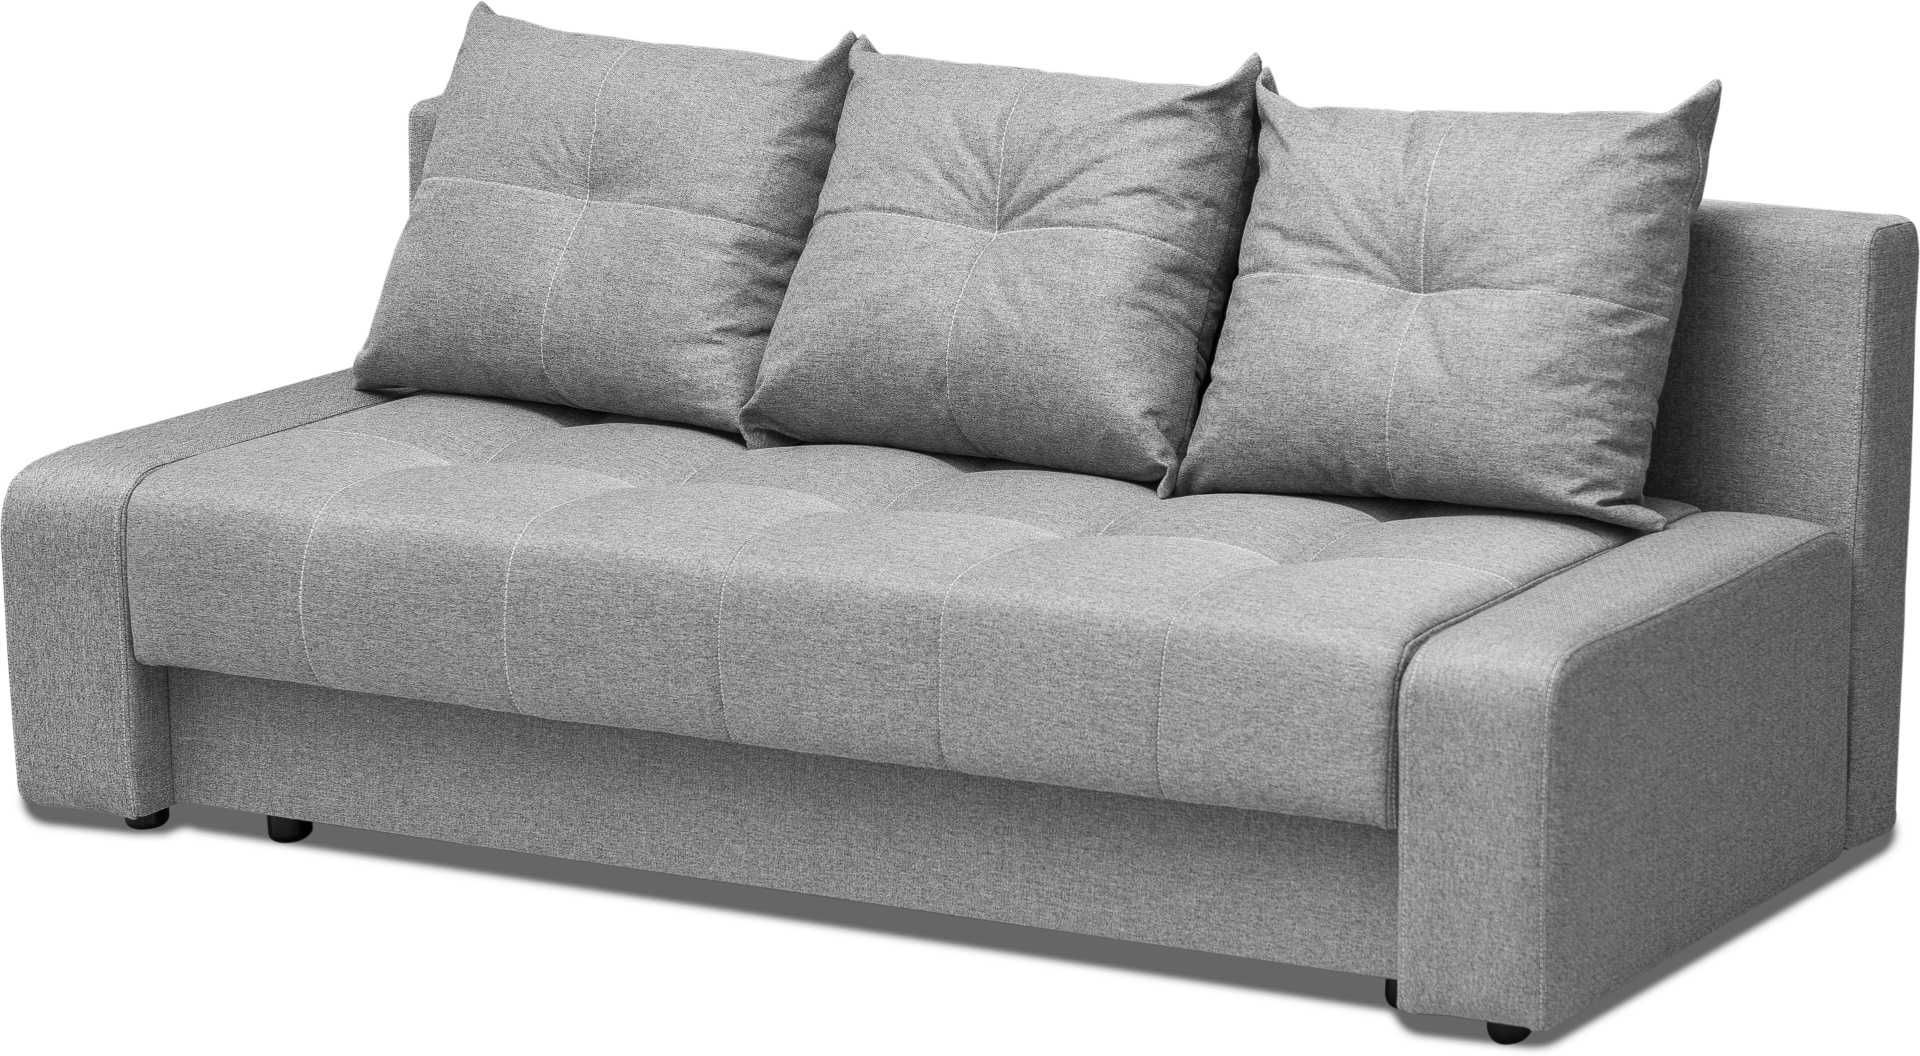 Распродажа! Новый диван "Манхэттен" от магазина АЗИЯ СКЛАД